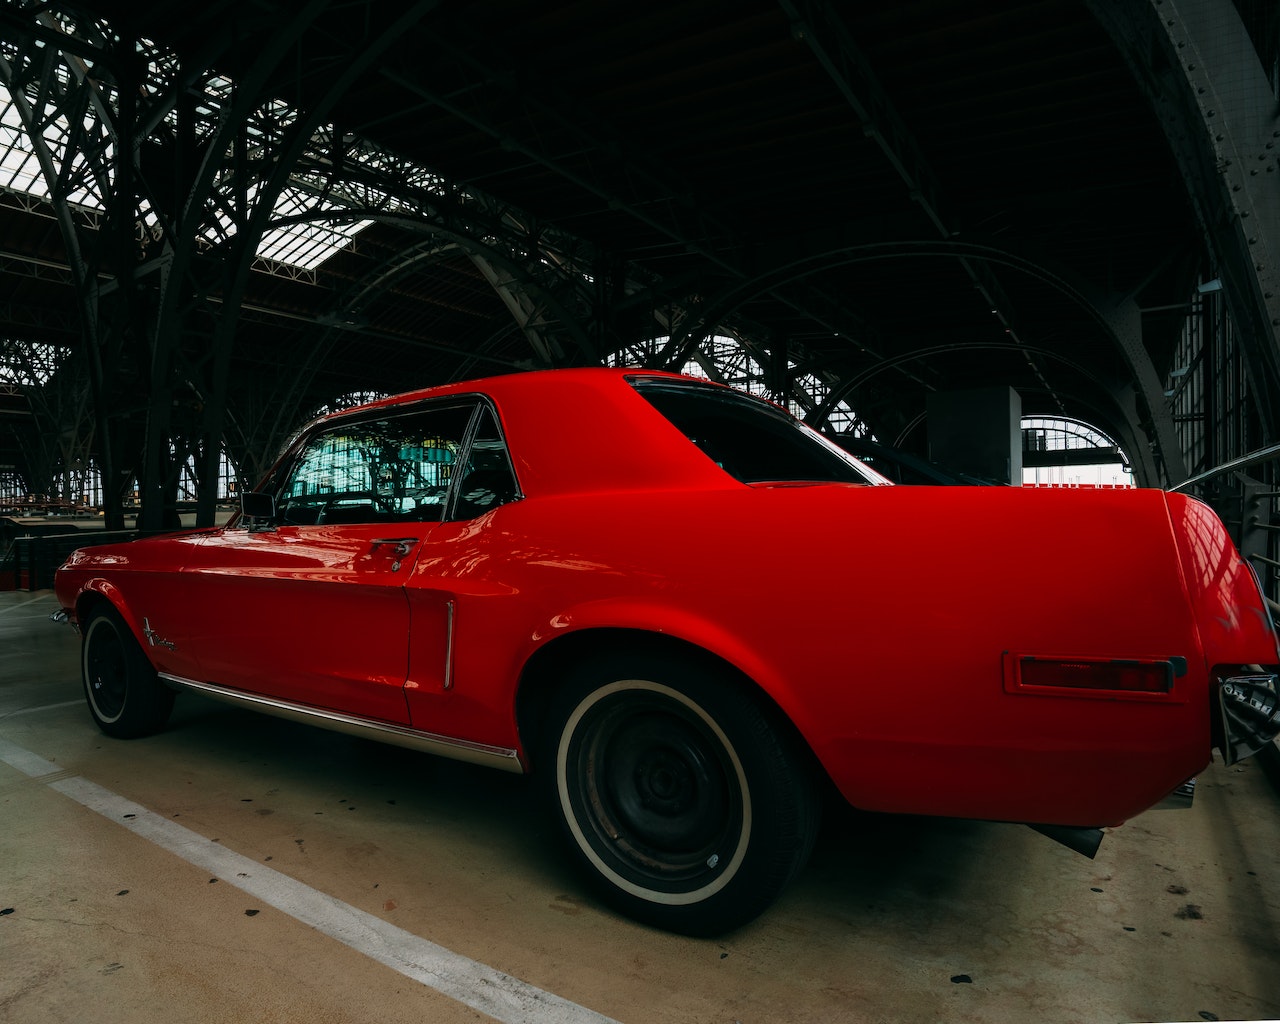 A Red Vintage Car | Veteran Car Donations